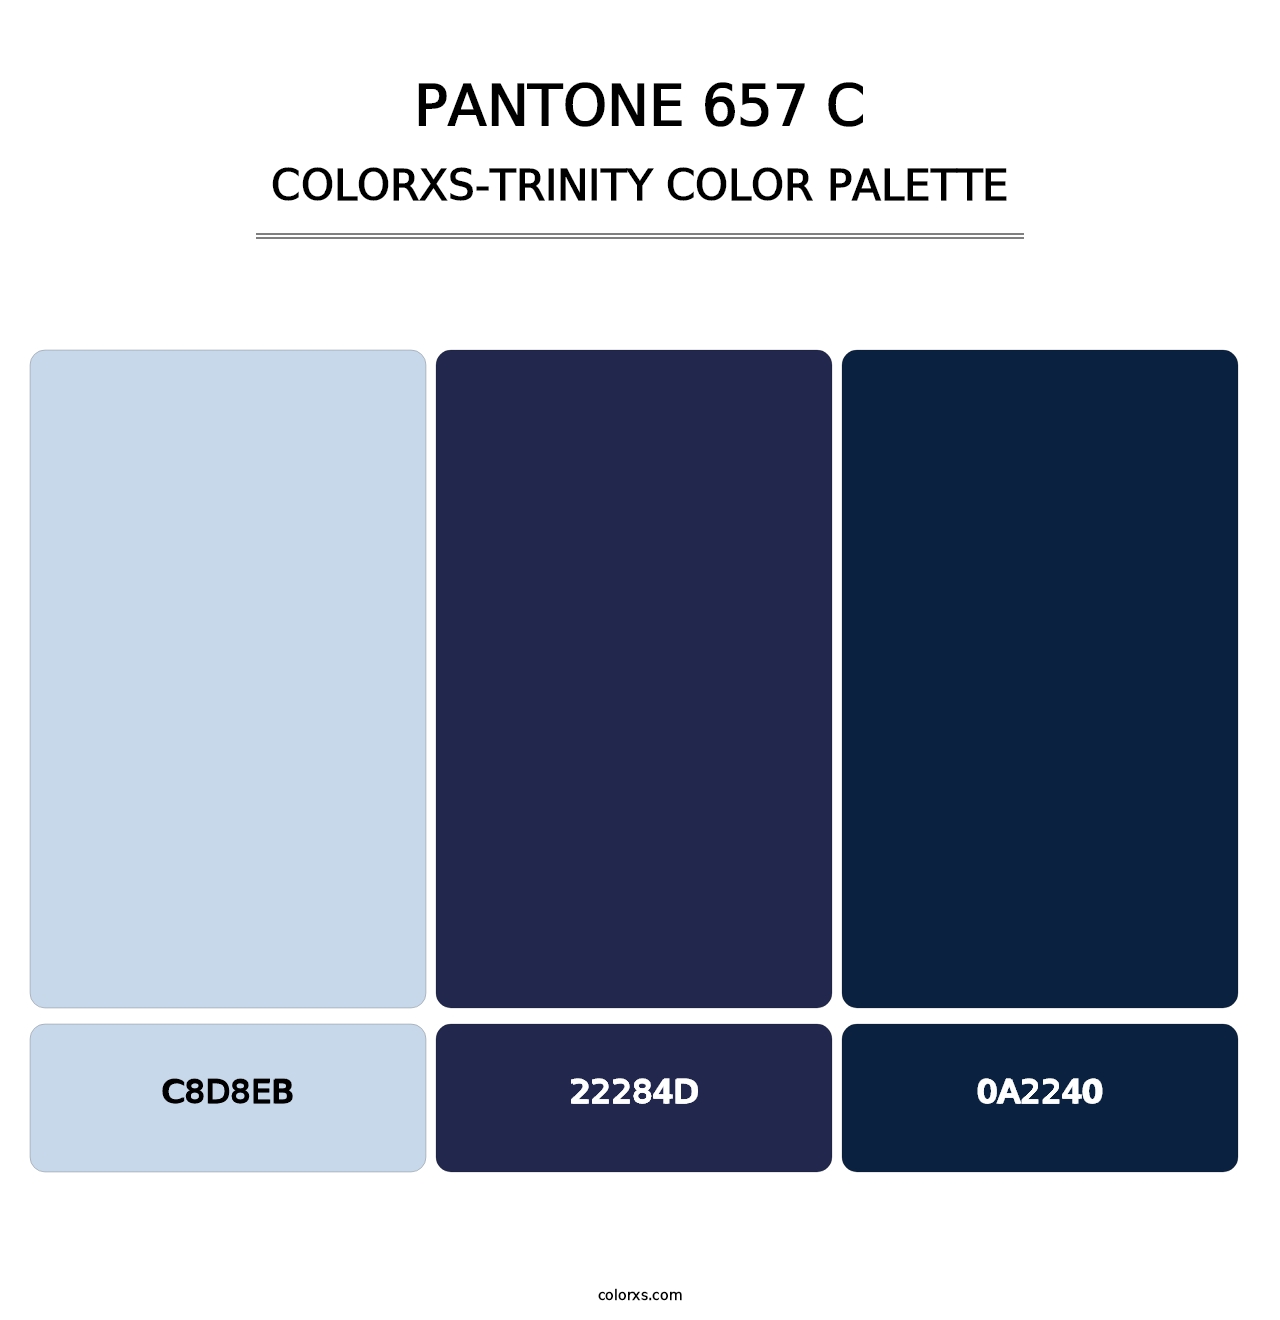 PANTONE 657 C - Colorxs Trinity Palette